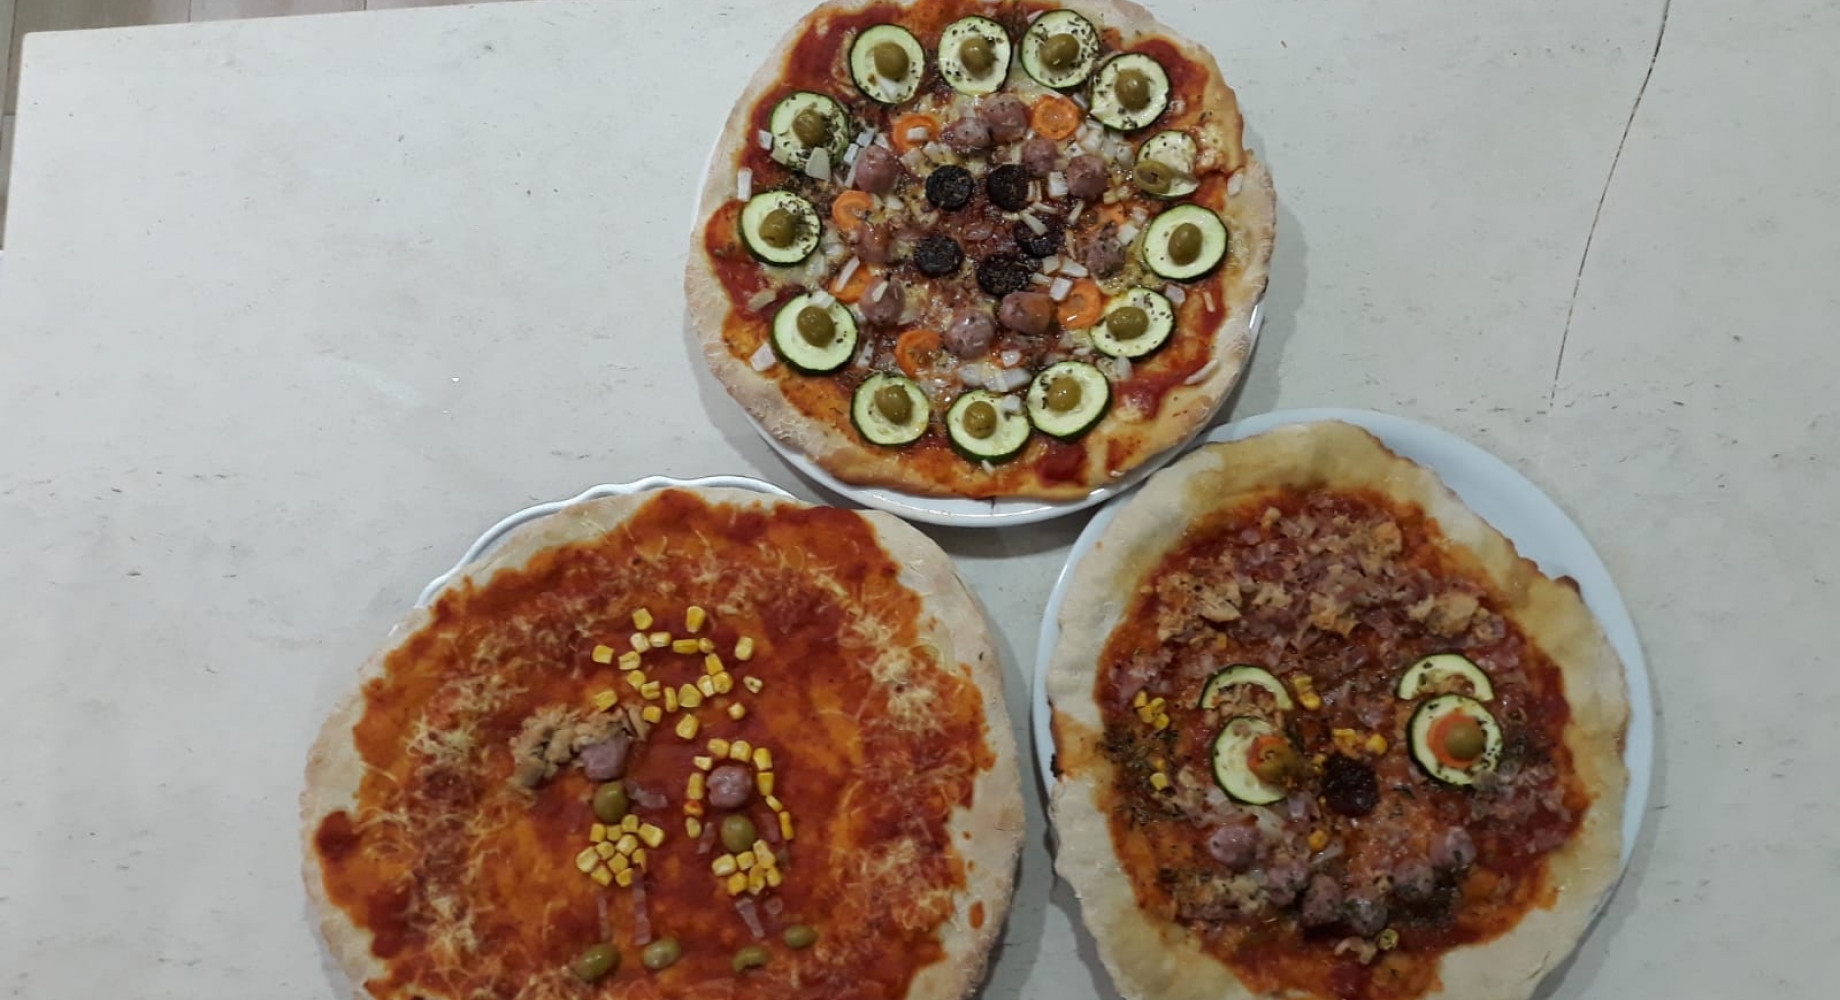 Homemade pizzas